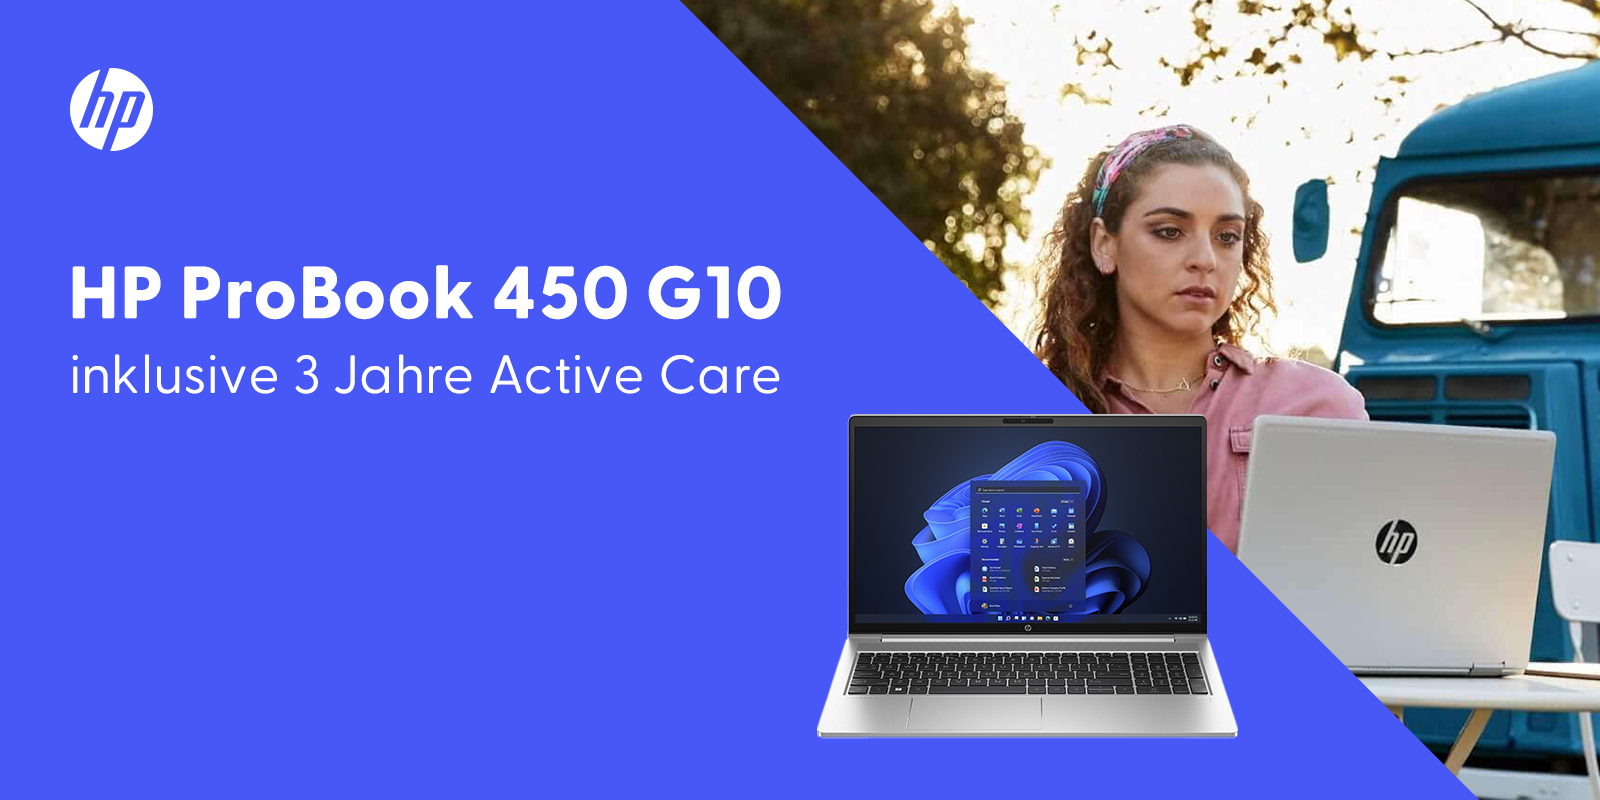 HP ProBook 450 G10 inklusive 3 Jahre Active Care